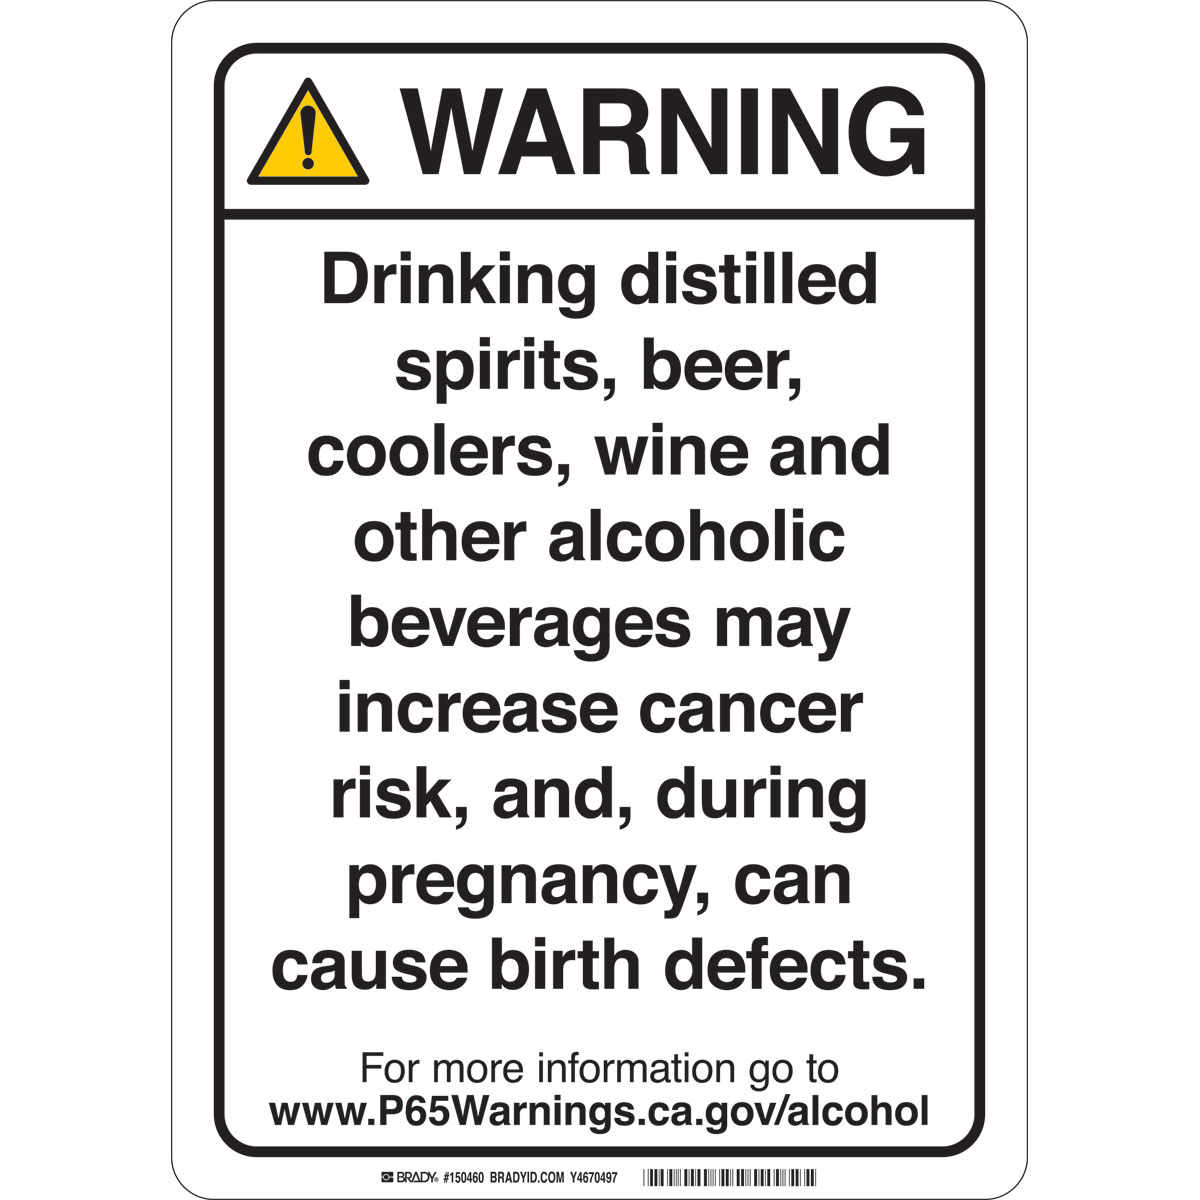 12x3 Alcoholic Beverages Prohibited Modern Block Heavy-Duty Outdoor Vinyl Banner CGSignLab 